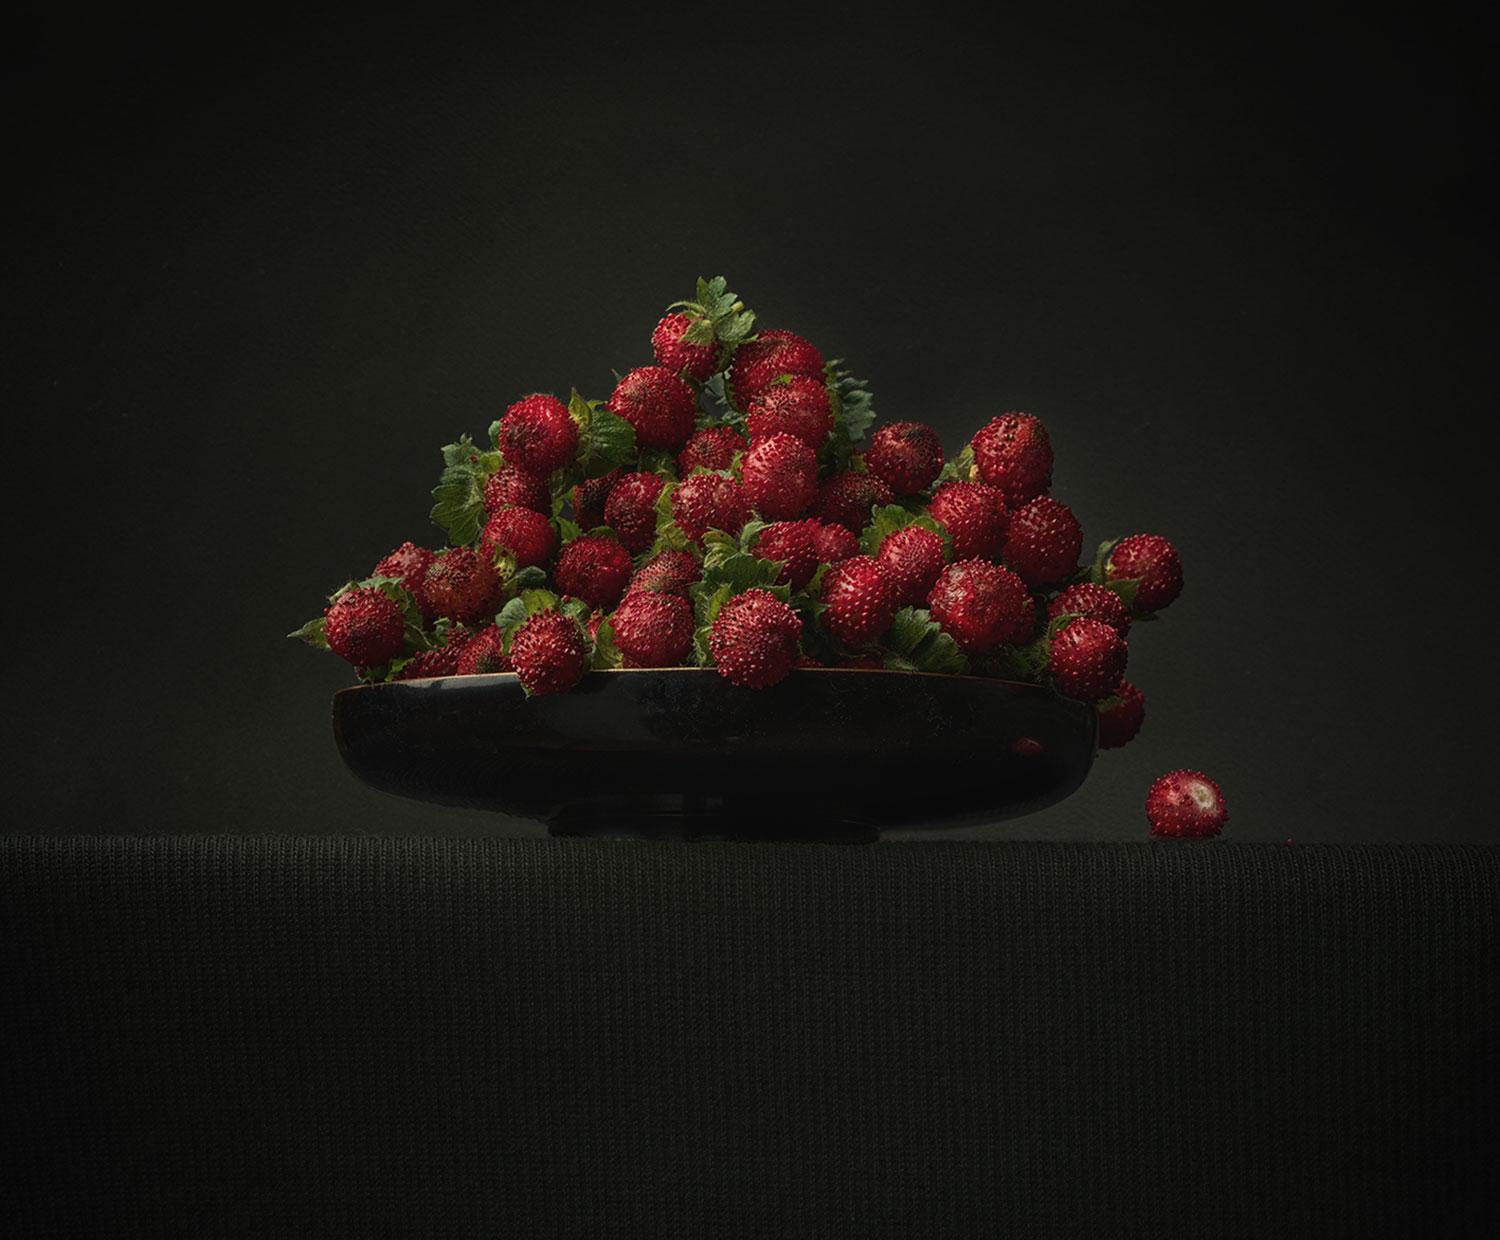 Ursula van de Bunte Still-Life Photograph - ''Strawberry's'' Dutch Contemporary Still-Life of Strawberry's in a Black Bowl